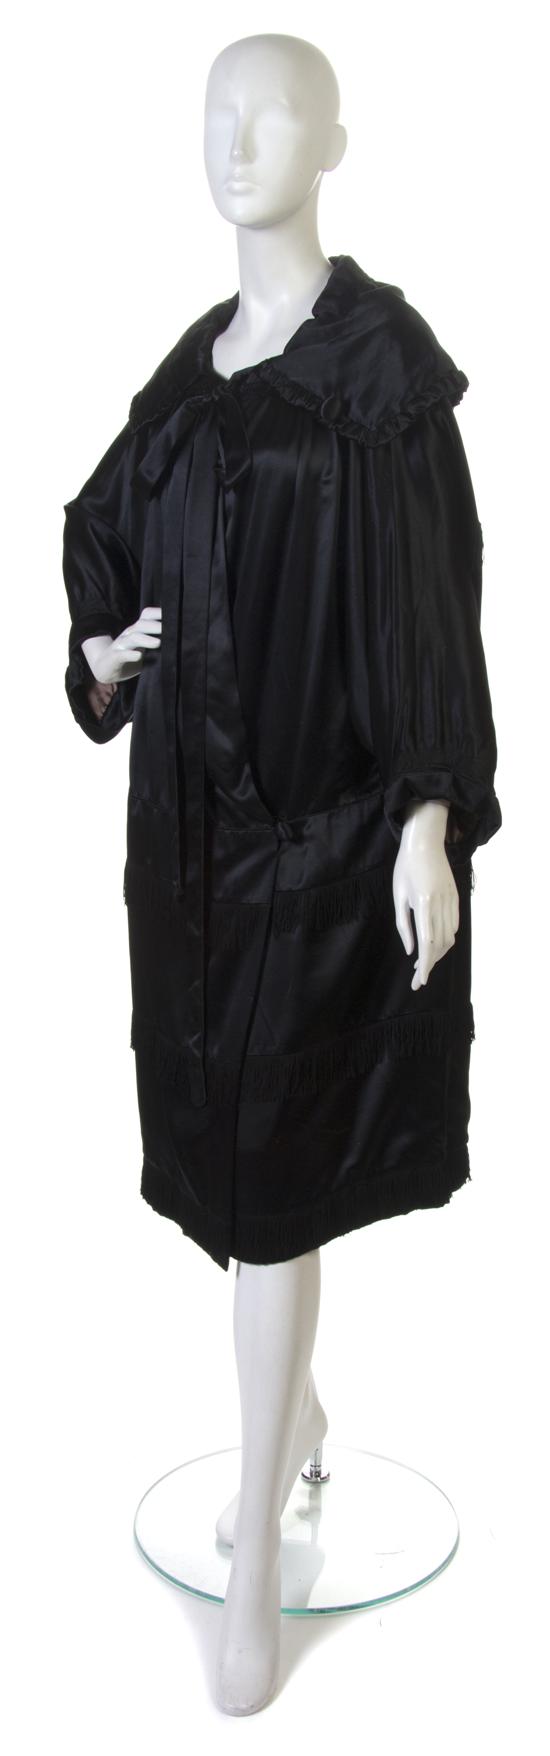 A Black Satin Evening Coat with fringe